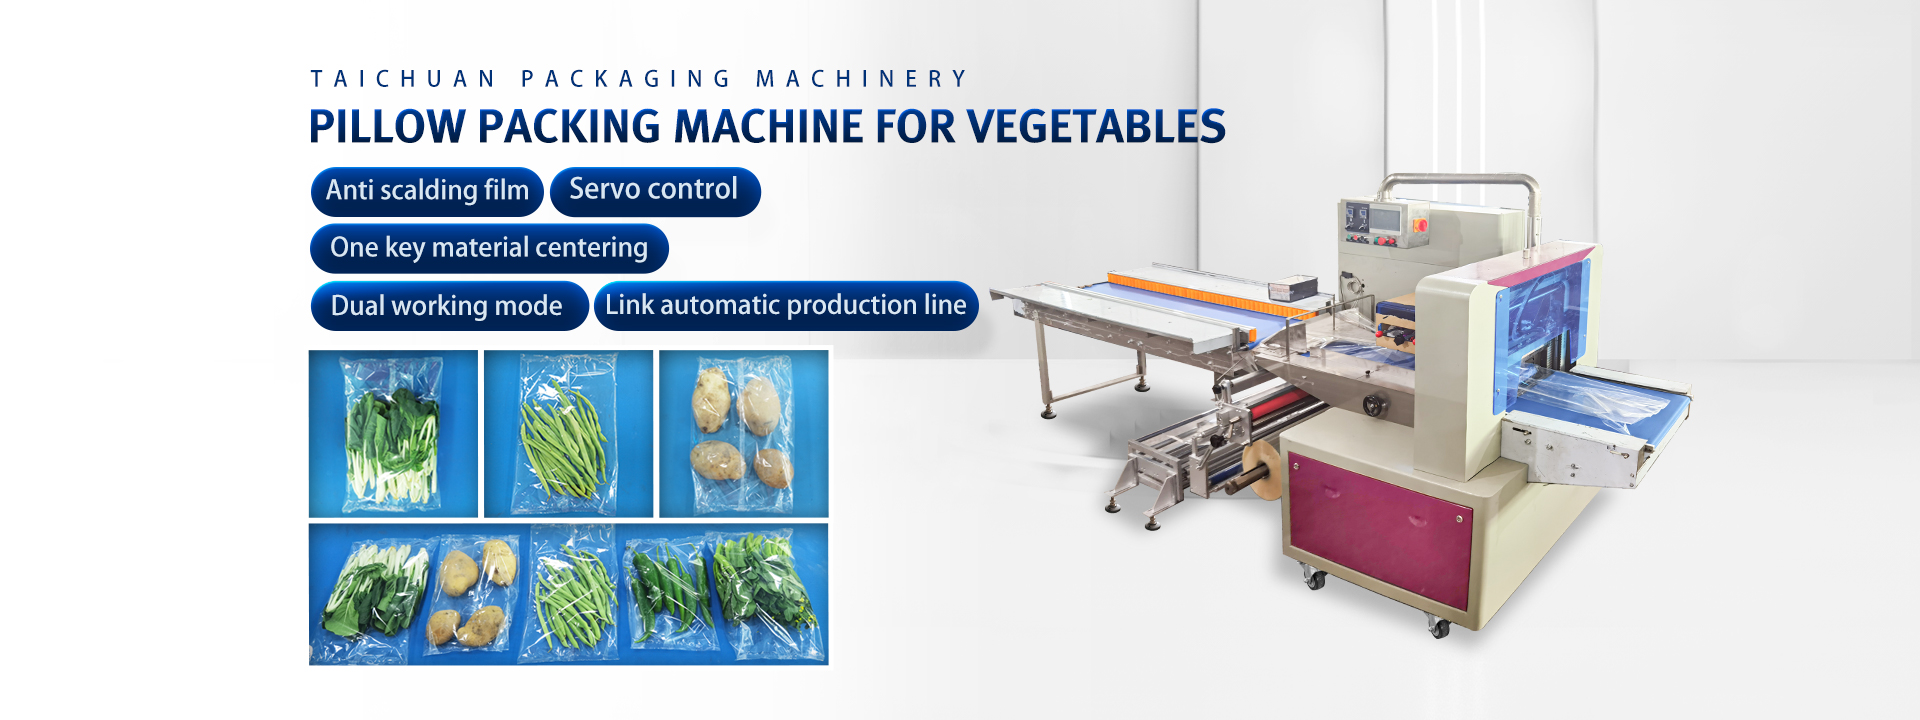 Vegetable packing machine